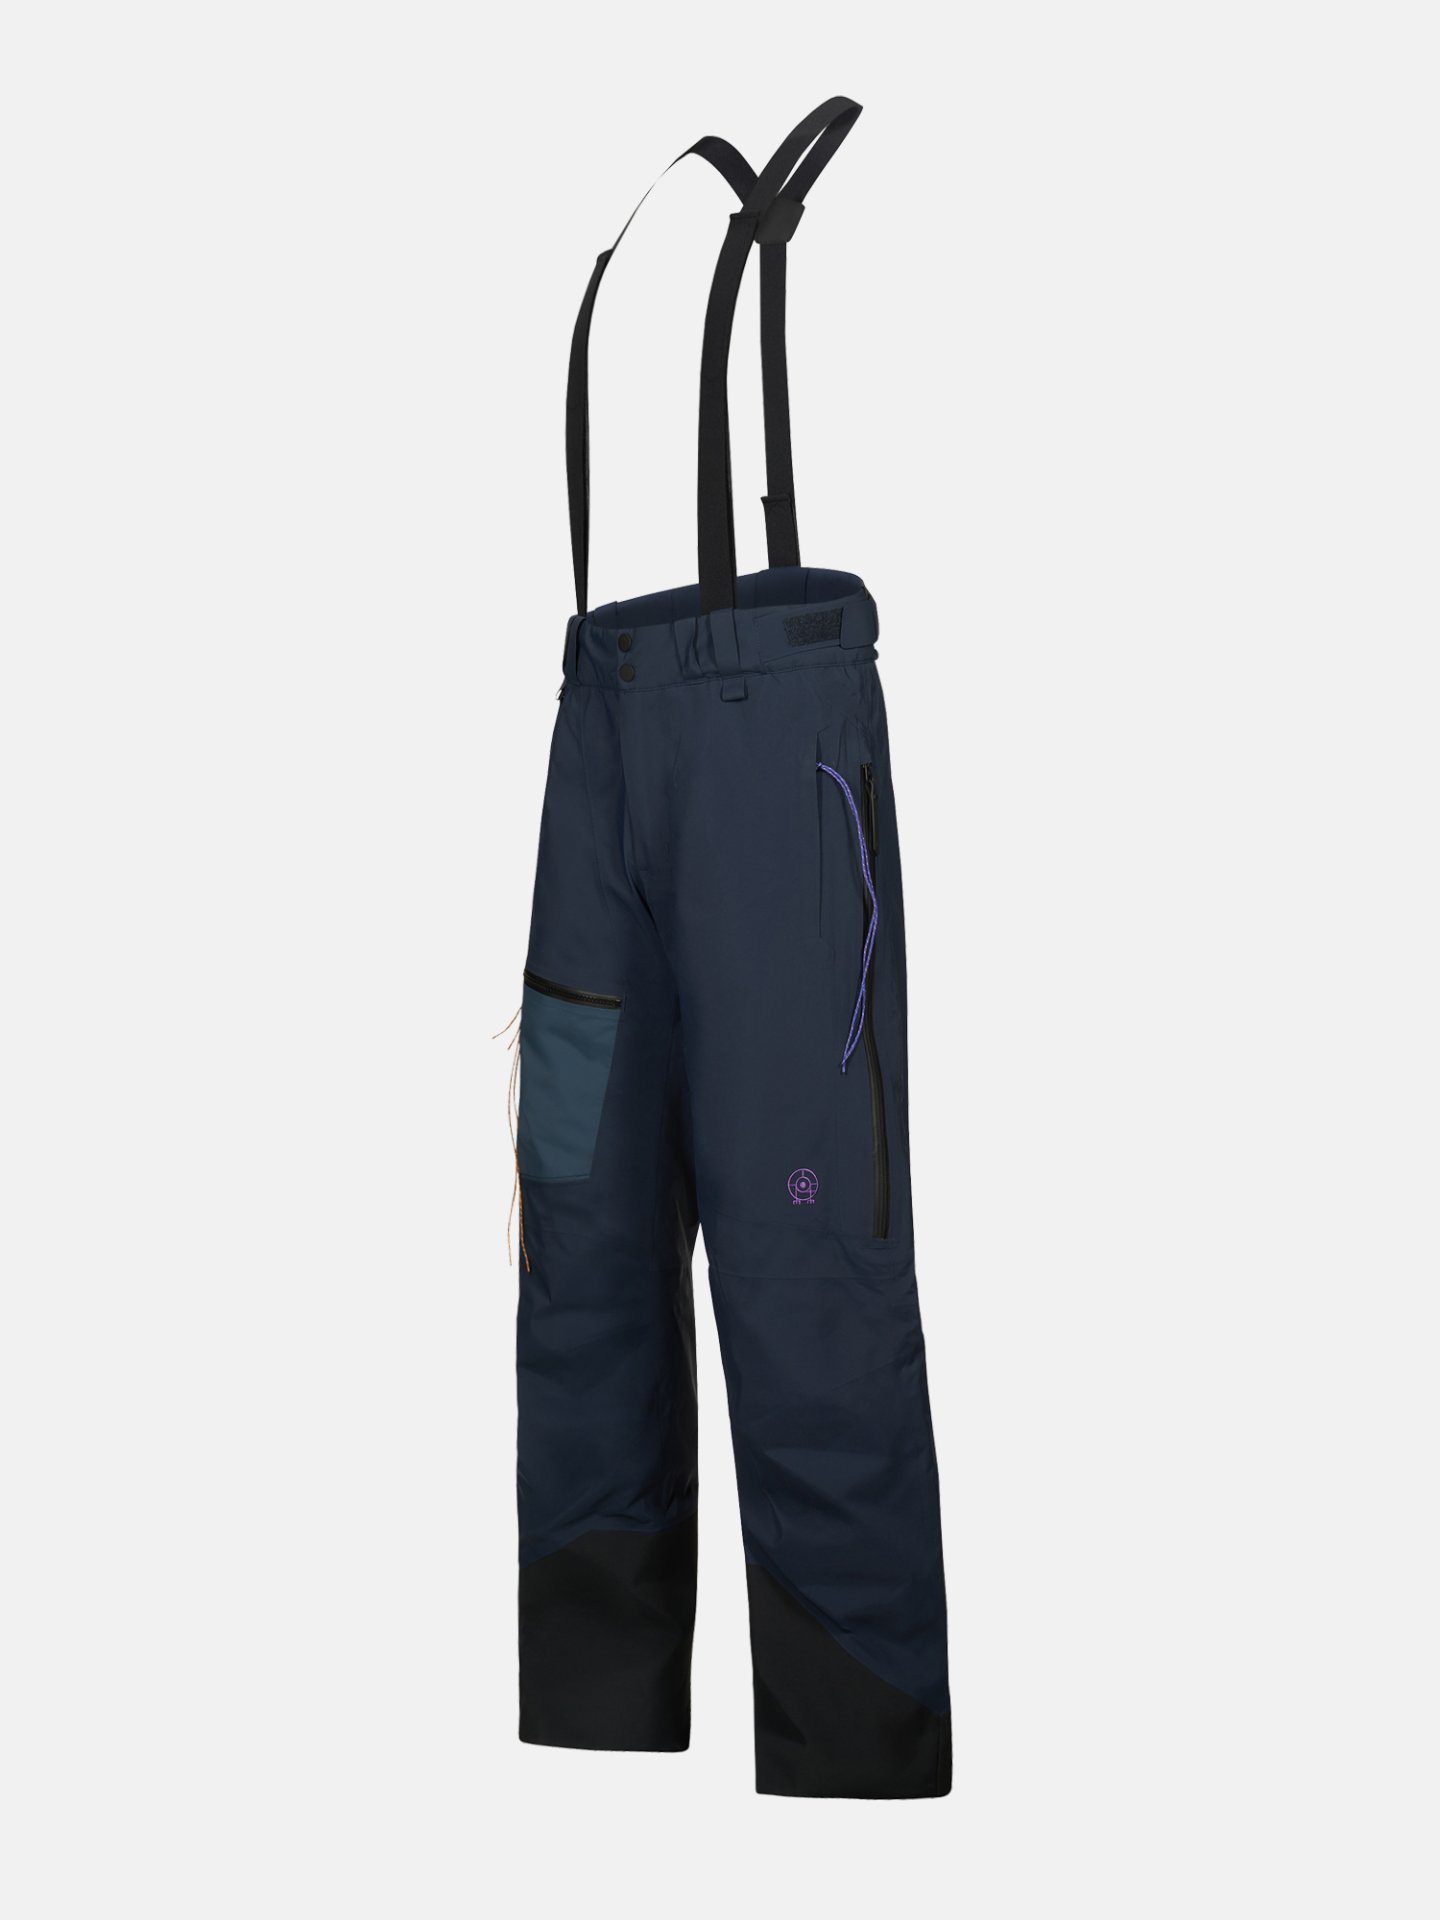 Peak Performance Gravity Pants  Ski trousers Womens  Buy online   Bergfreundeeu